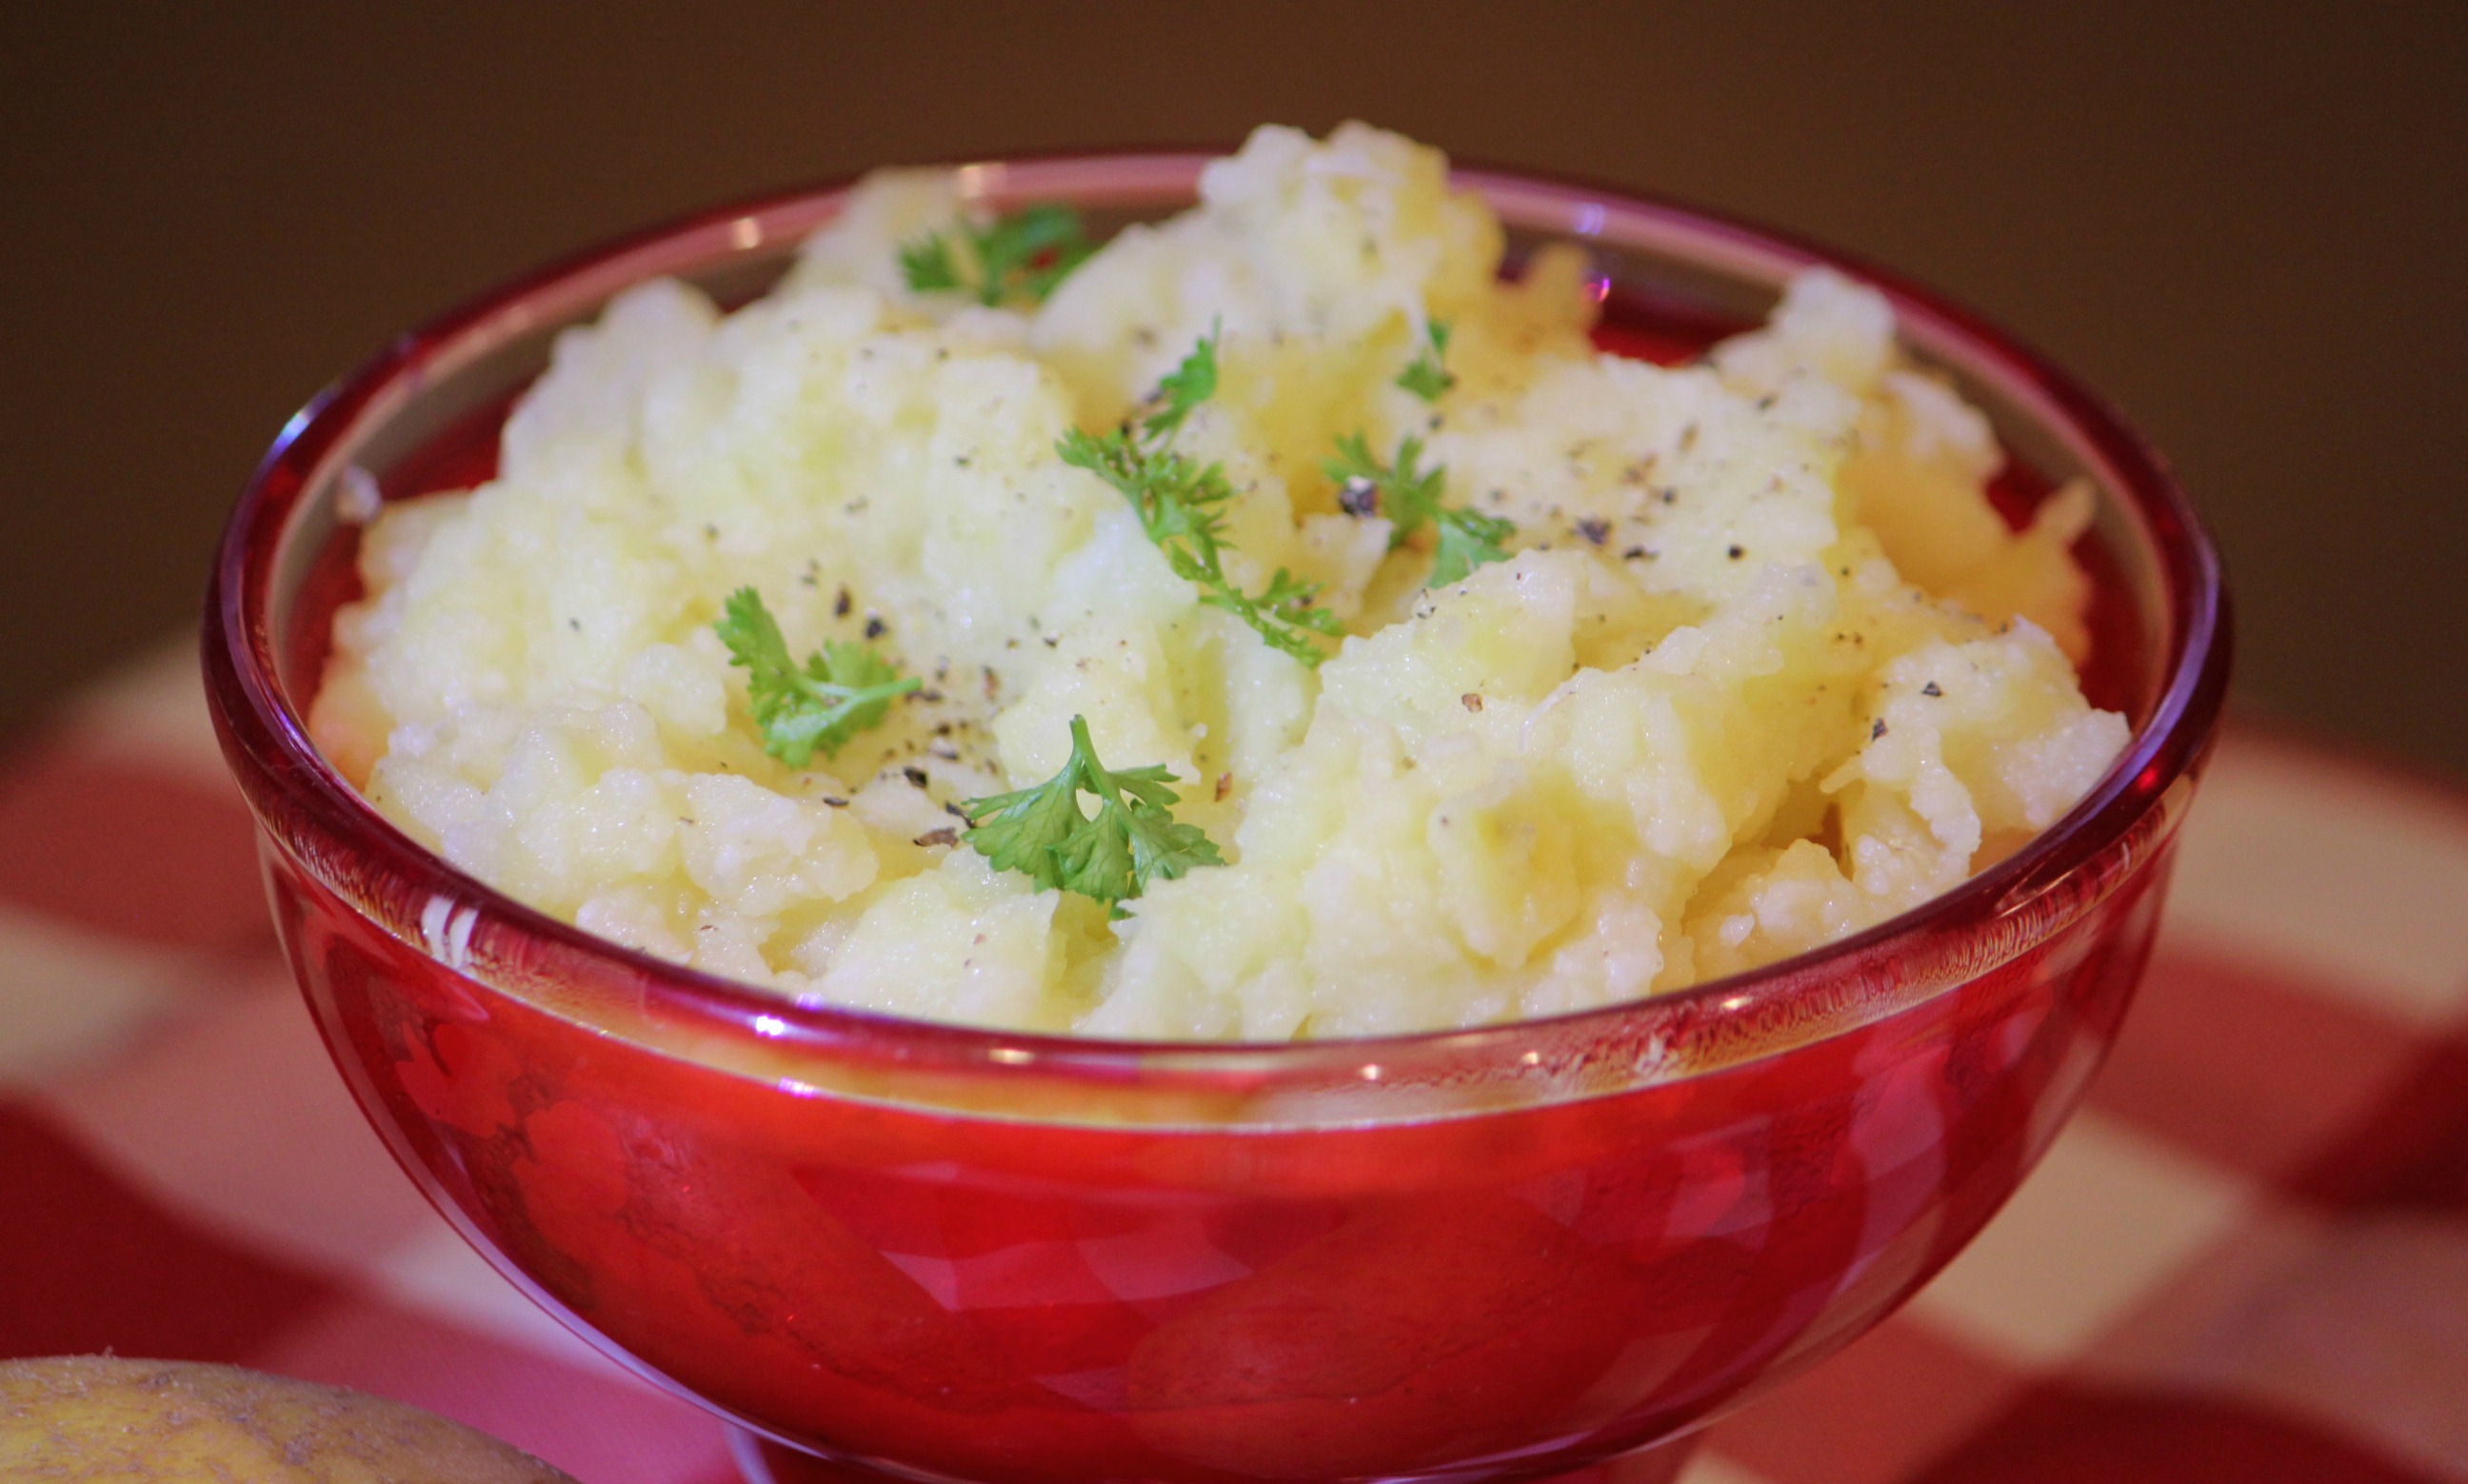 Food from the World: Cauliflower and Garlic Salad